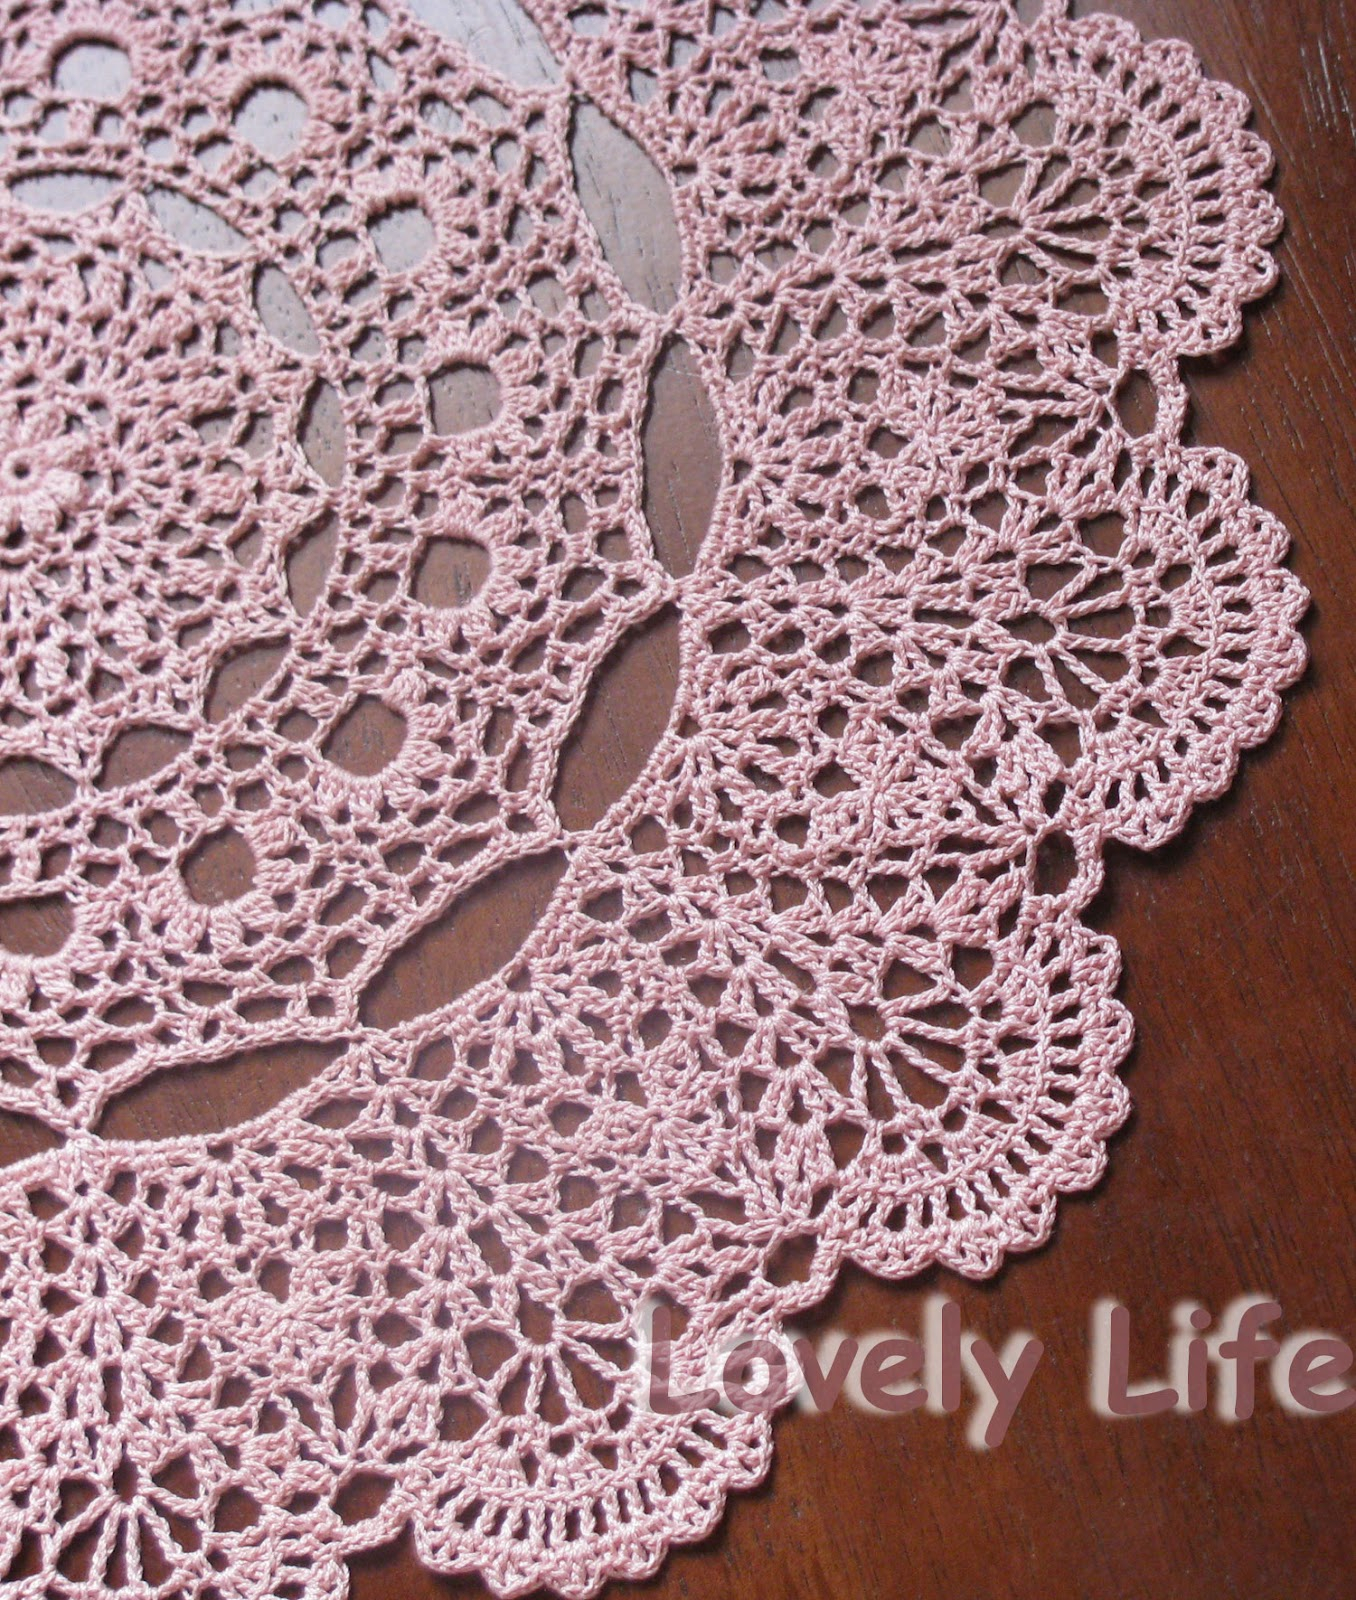 Free Crochet Oval Tablecloth Patterns Lovely Life Mantilla Doily